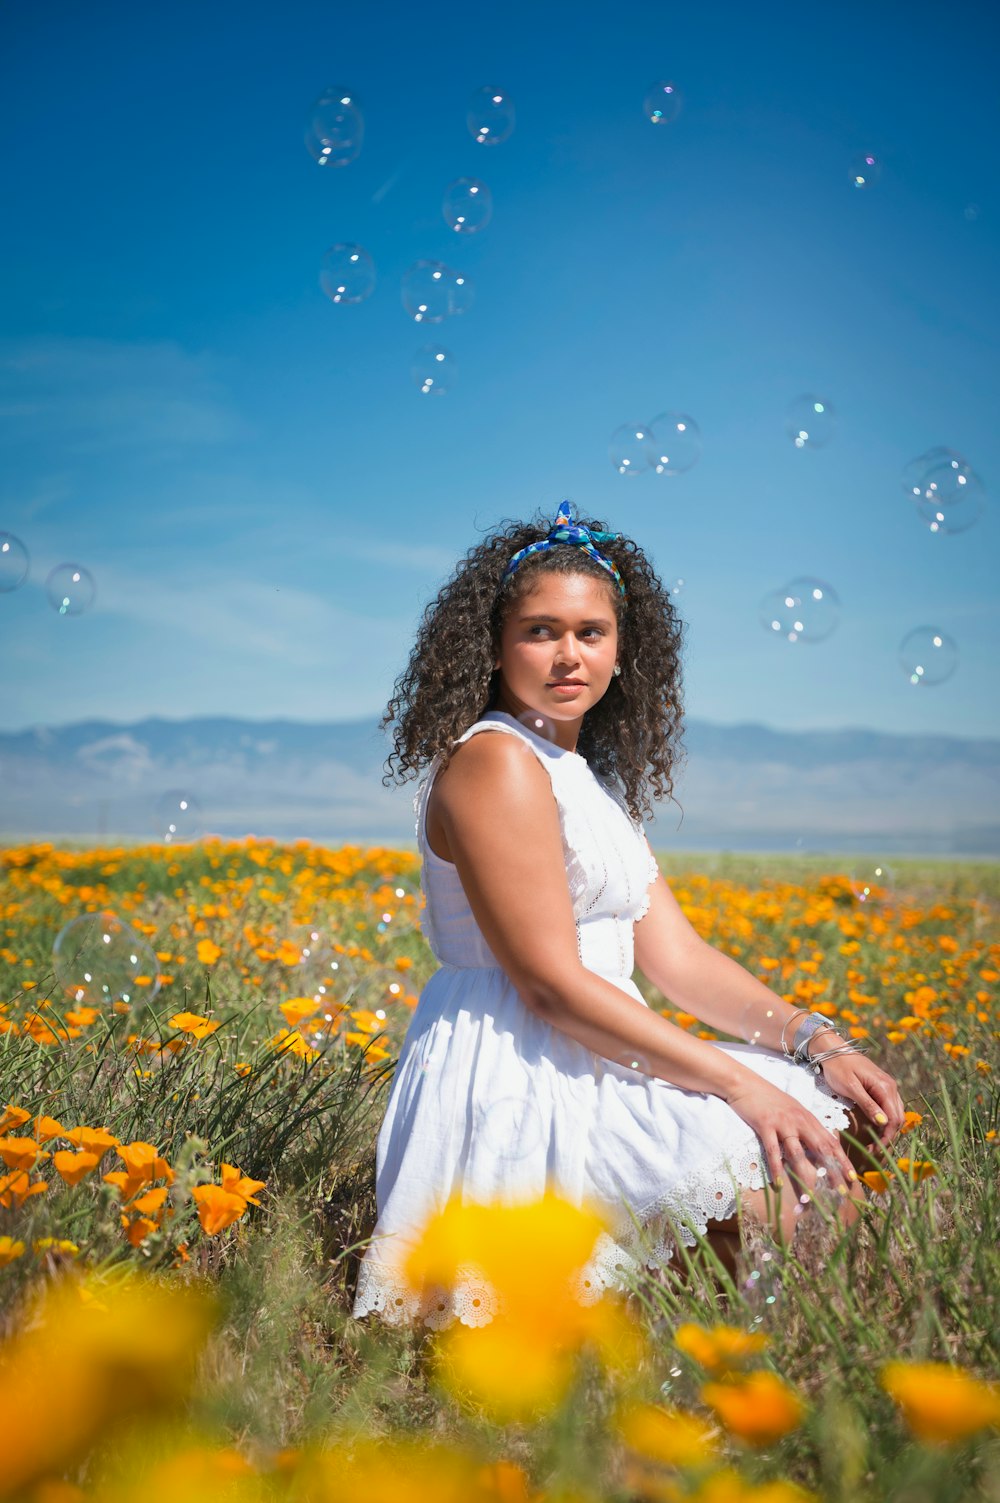 girl in white sleeveless dress standing on yellow flower field during daytime